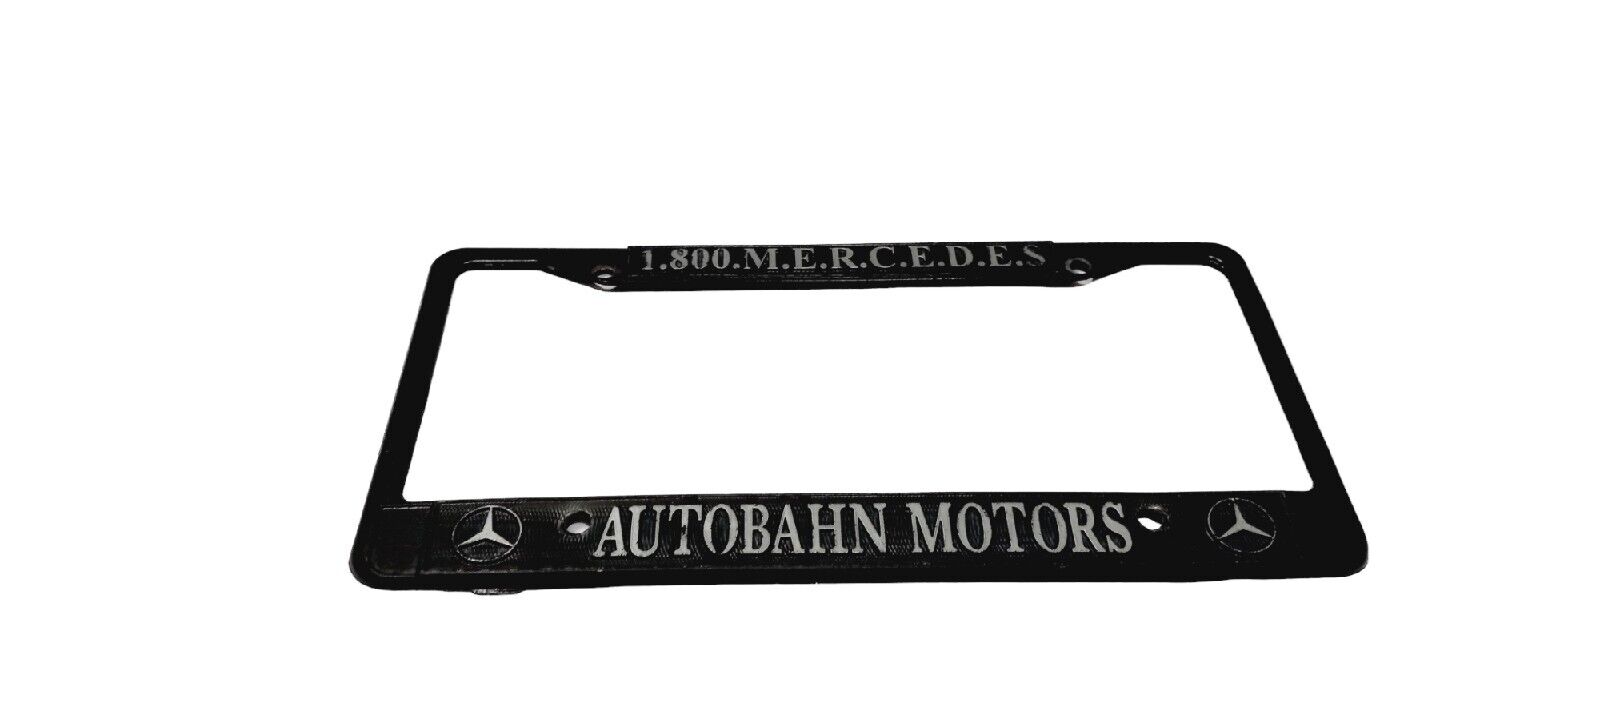 Vintage Autobahn Motors Mercedes-Benz California Metal License Plate Frame Black